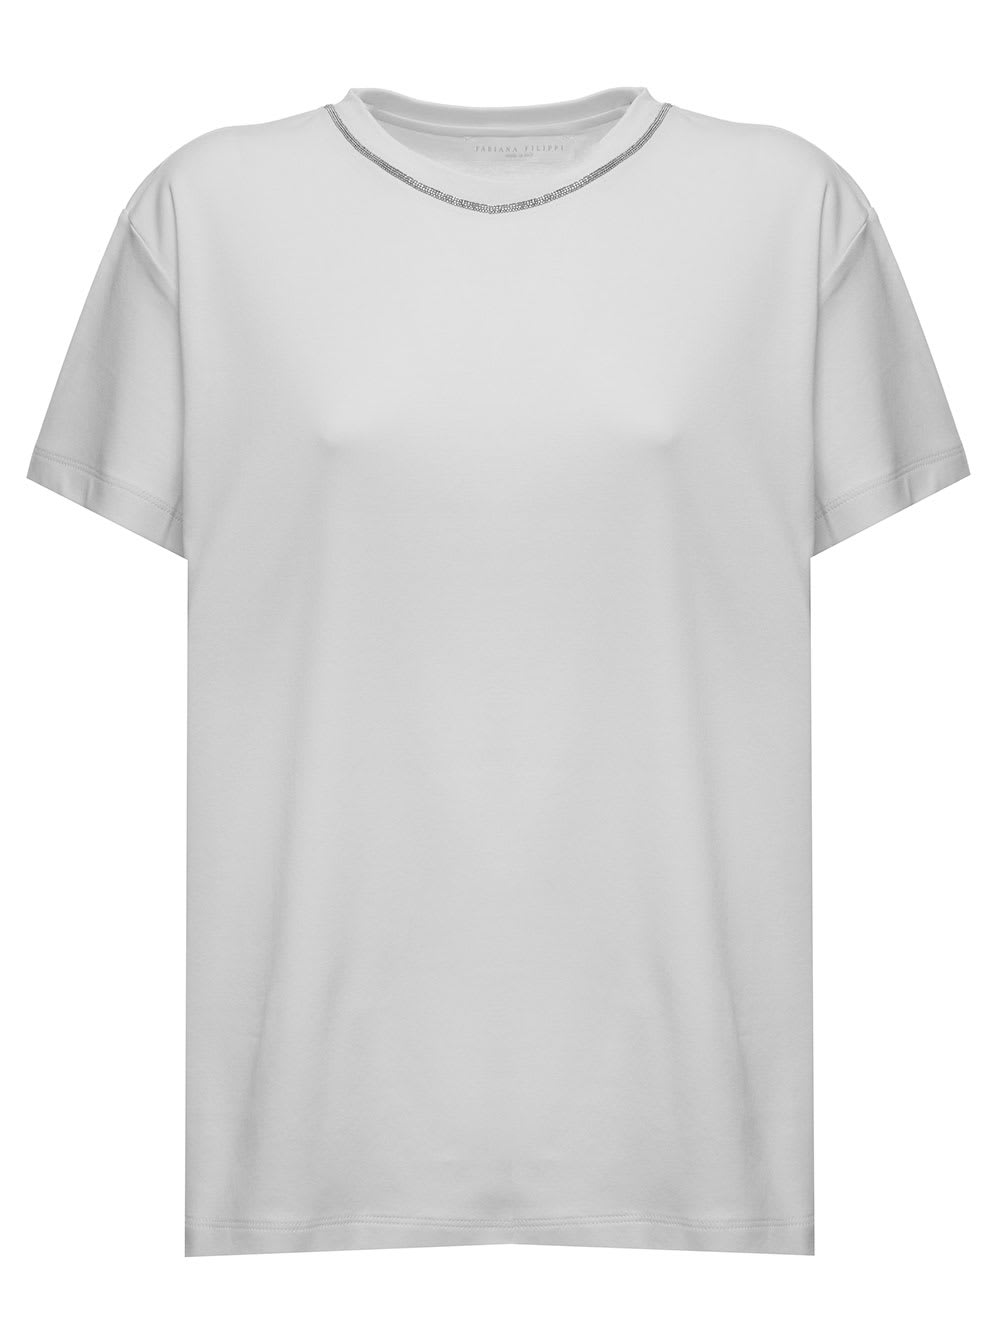 Fabiana Filippi Womans White Cotton T-shirt With Metal Insert